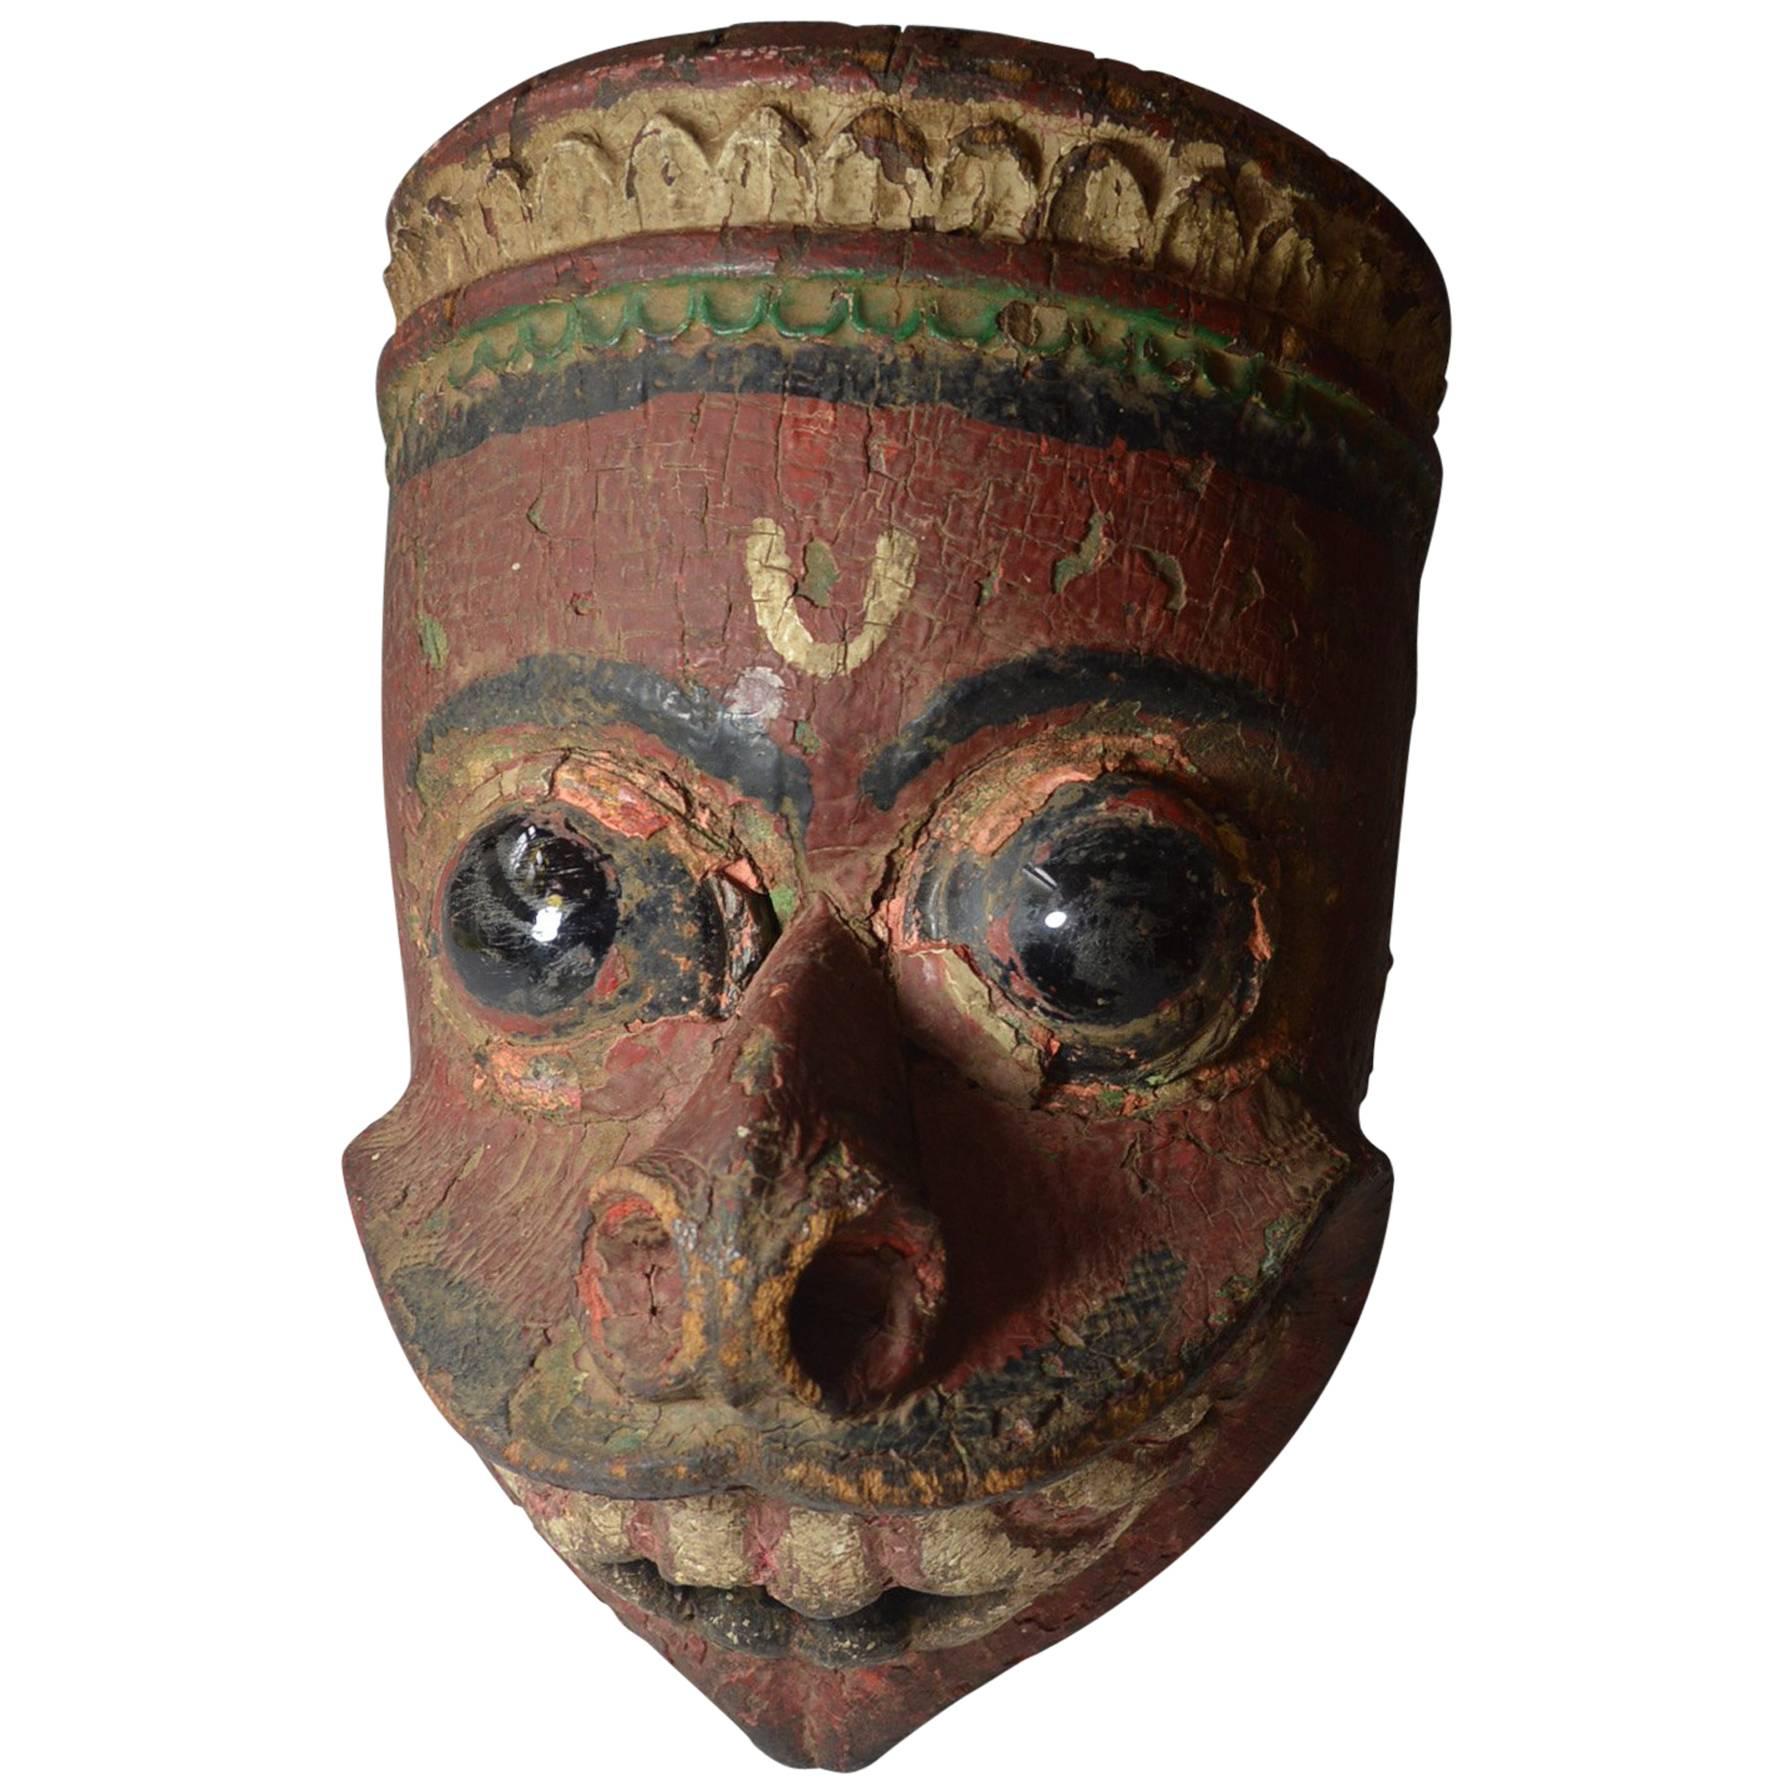 Superb Antique Nepalese Temple Mask of Hanuman the Monkey God